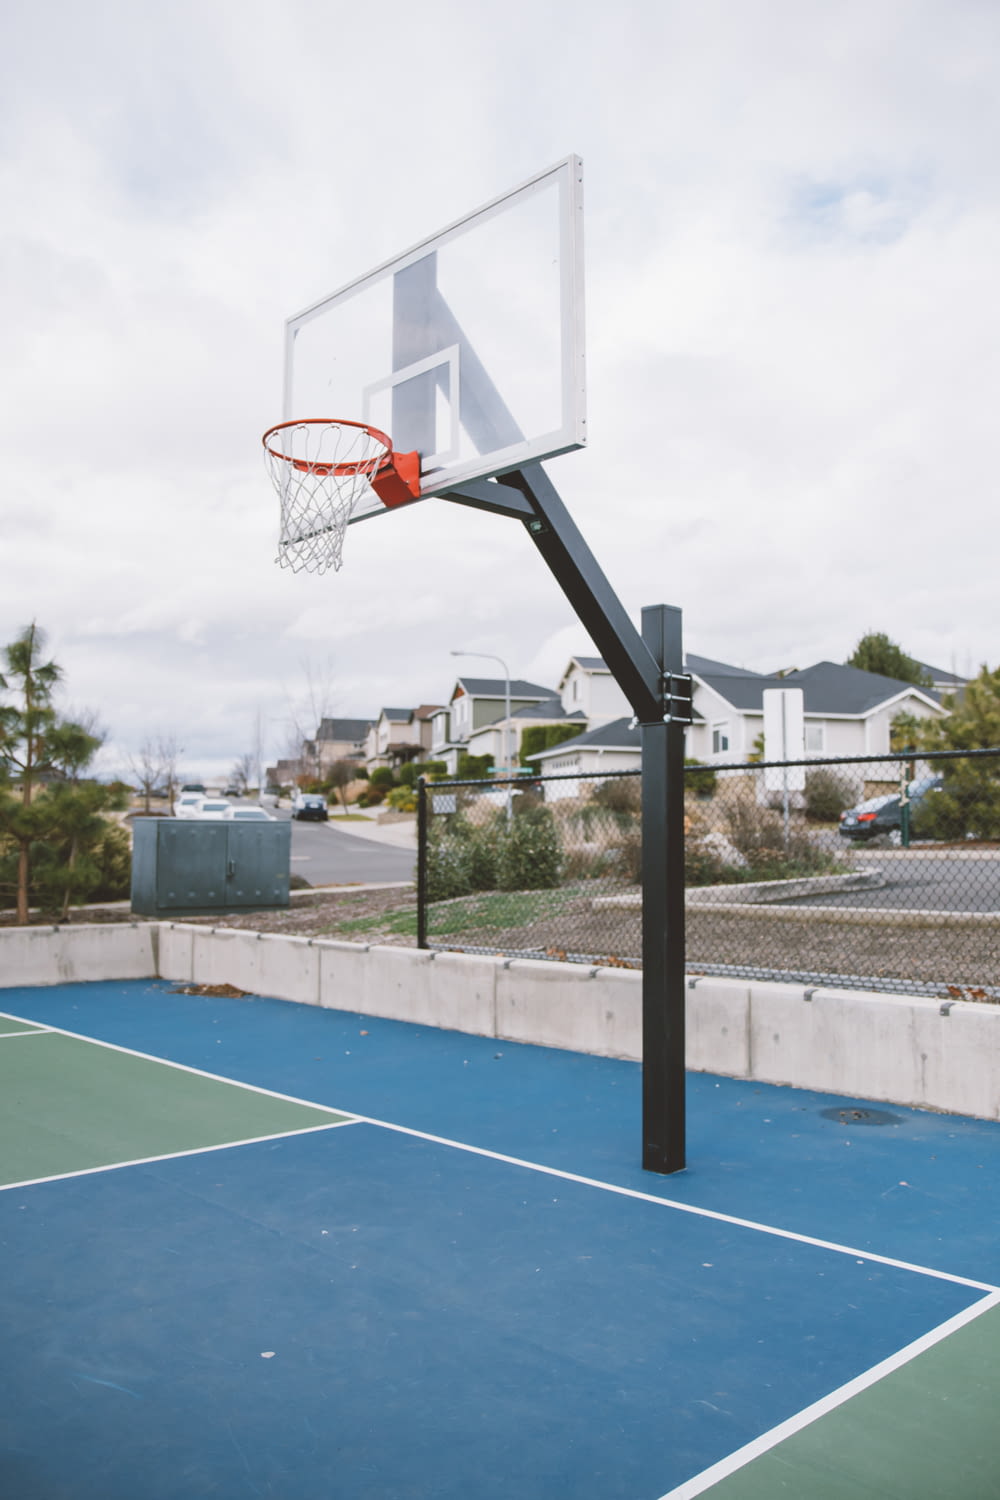 basketball hoop on basketball court during daytime